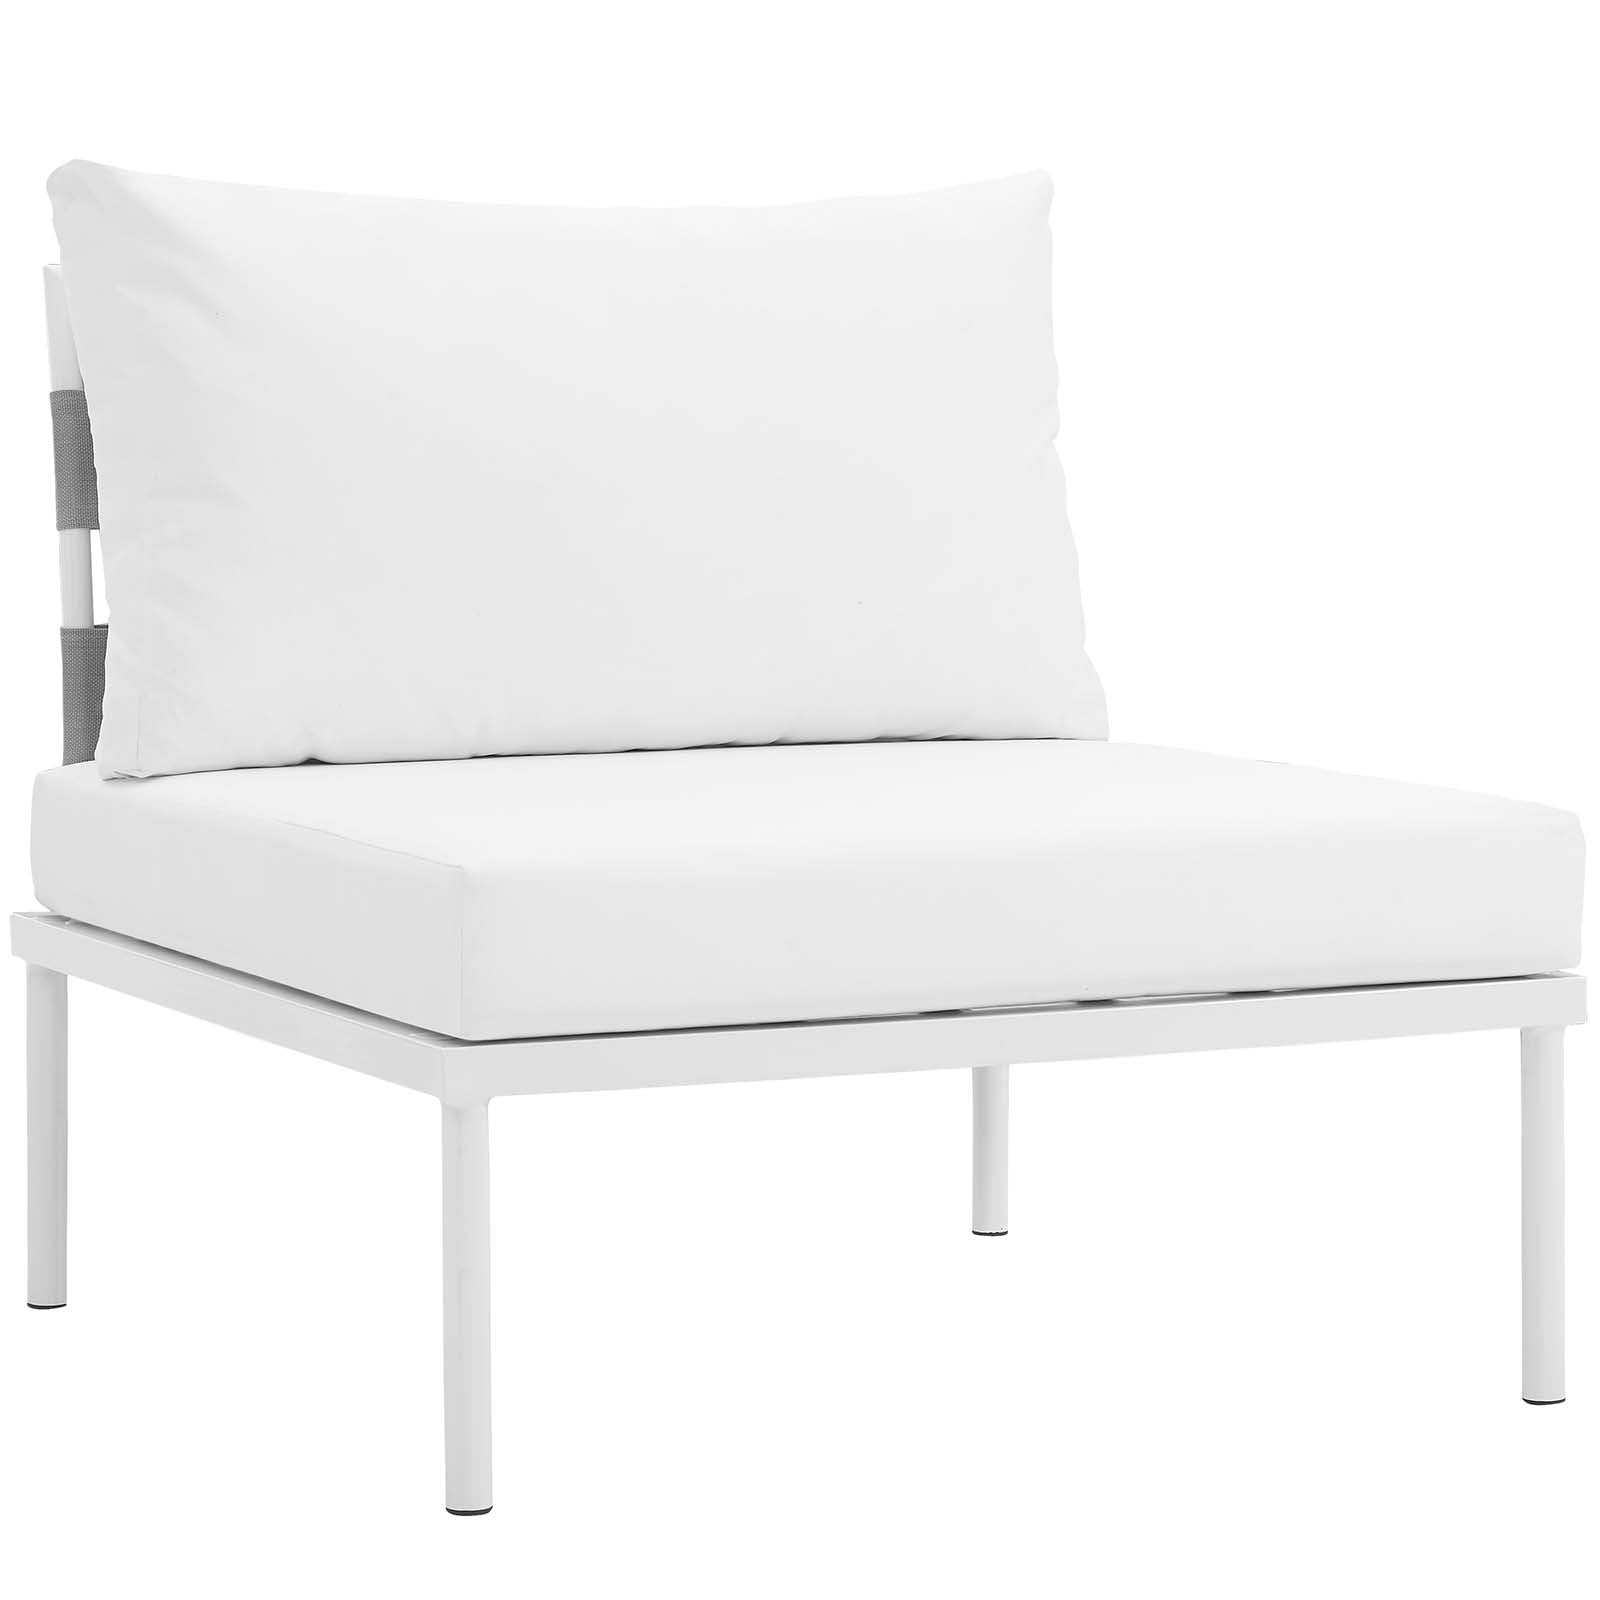 Modway Outdoor Conversation Sets - Harmony 132" 7 Piece Outdoor Patio Aluminum Sectional Sofa Set White White